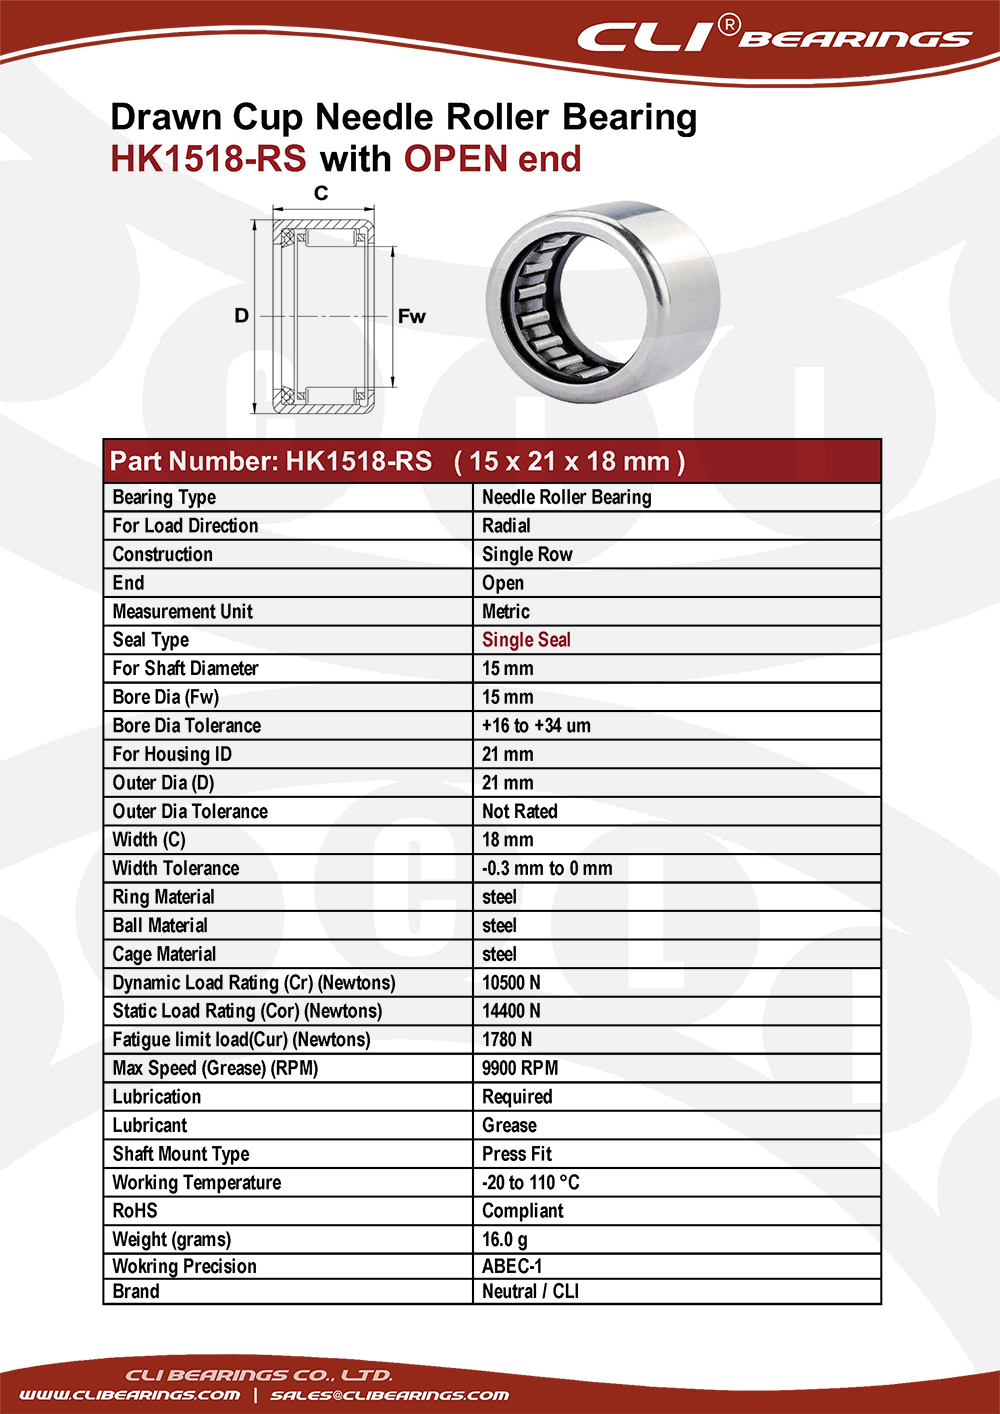 Original hk1518 rs 15x21x18 mm drawn cup needle roller bearings cli bearings co ltd nw